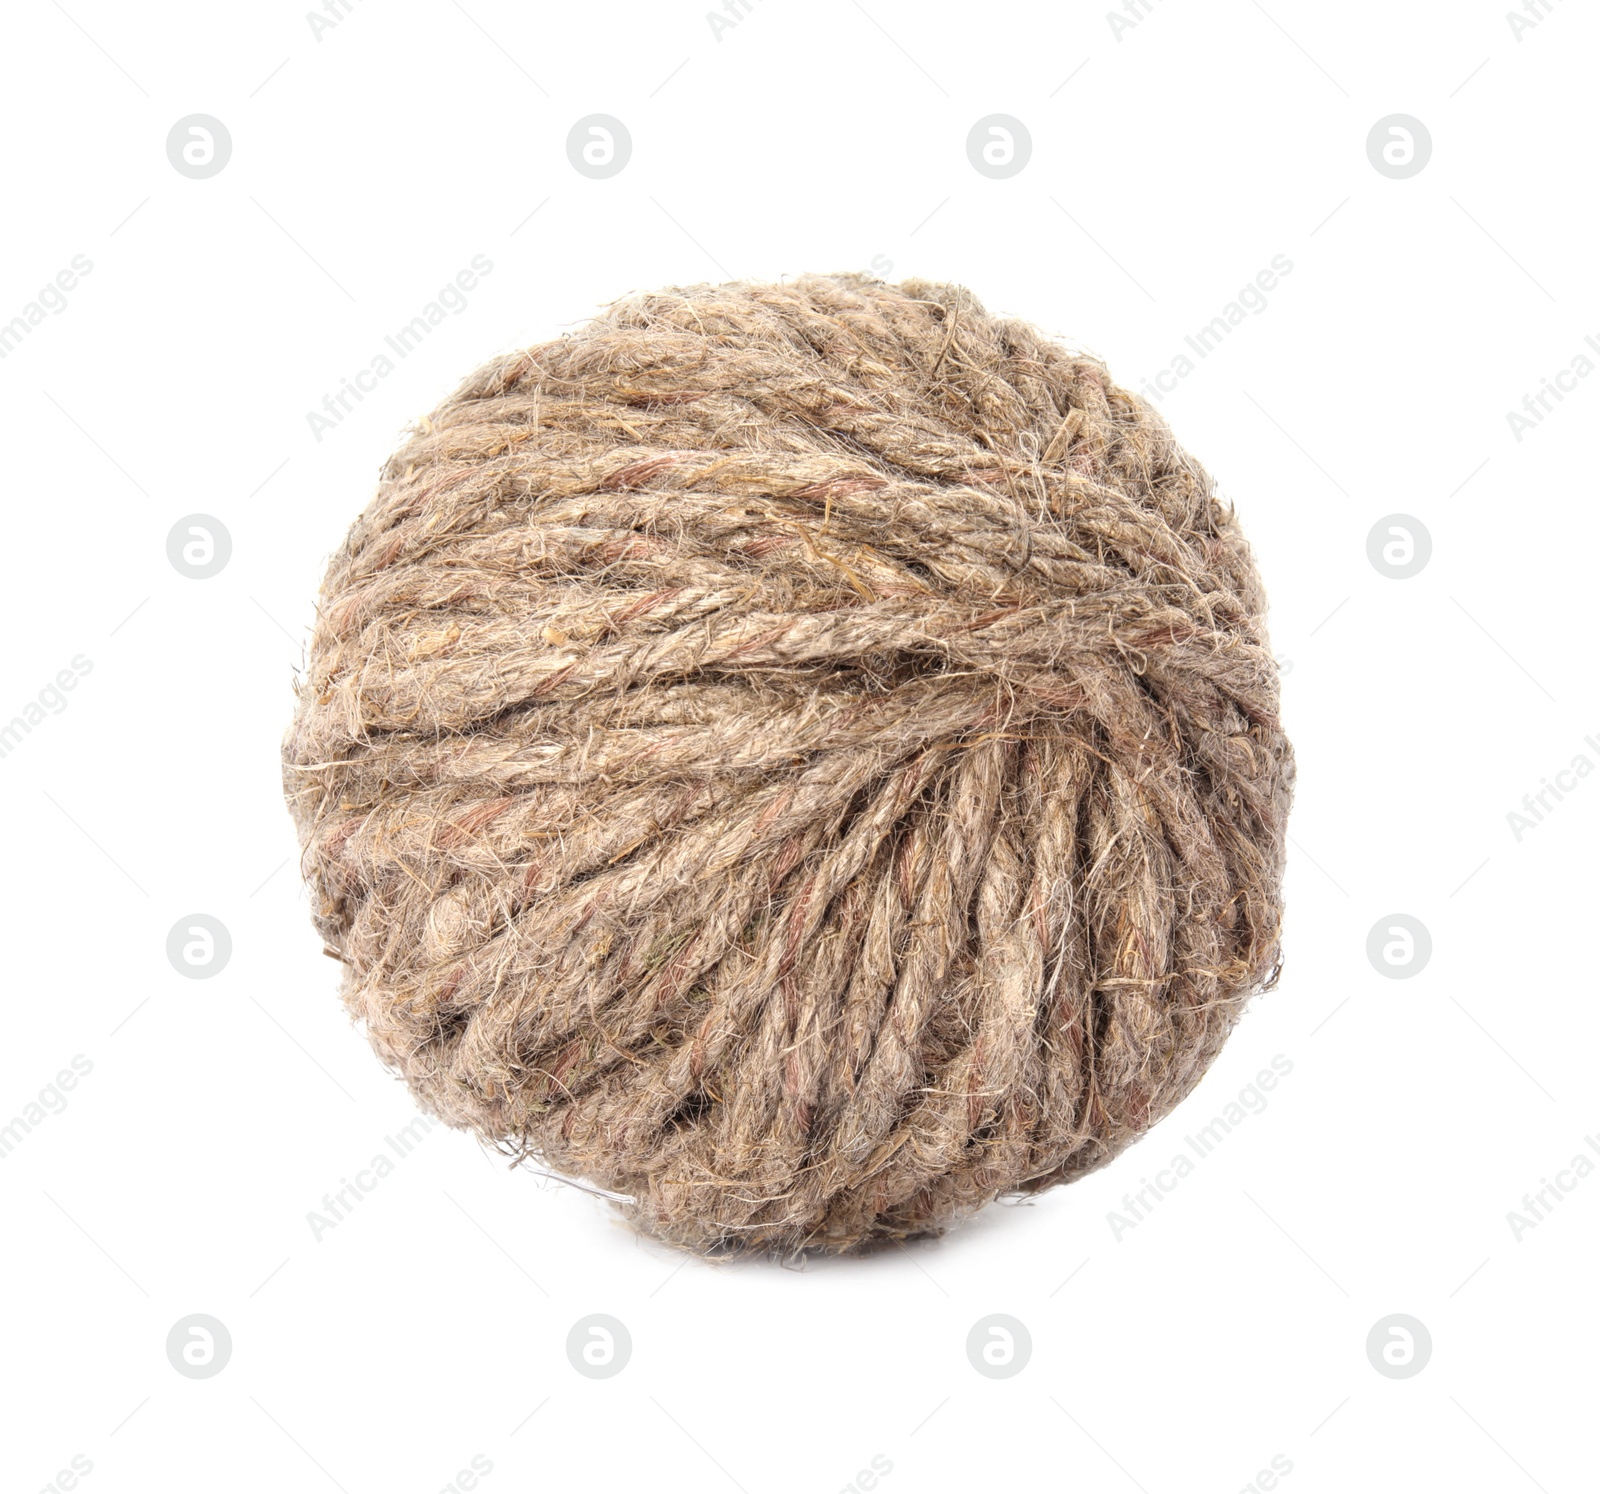 Photo of Ball of hemp rope on white background